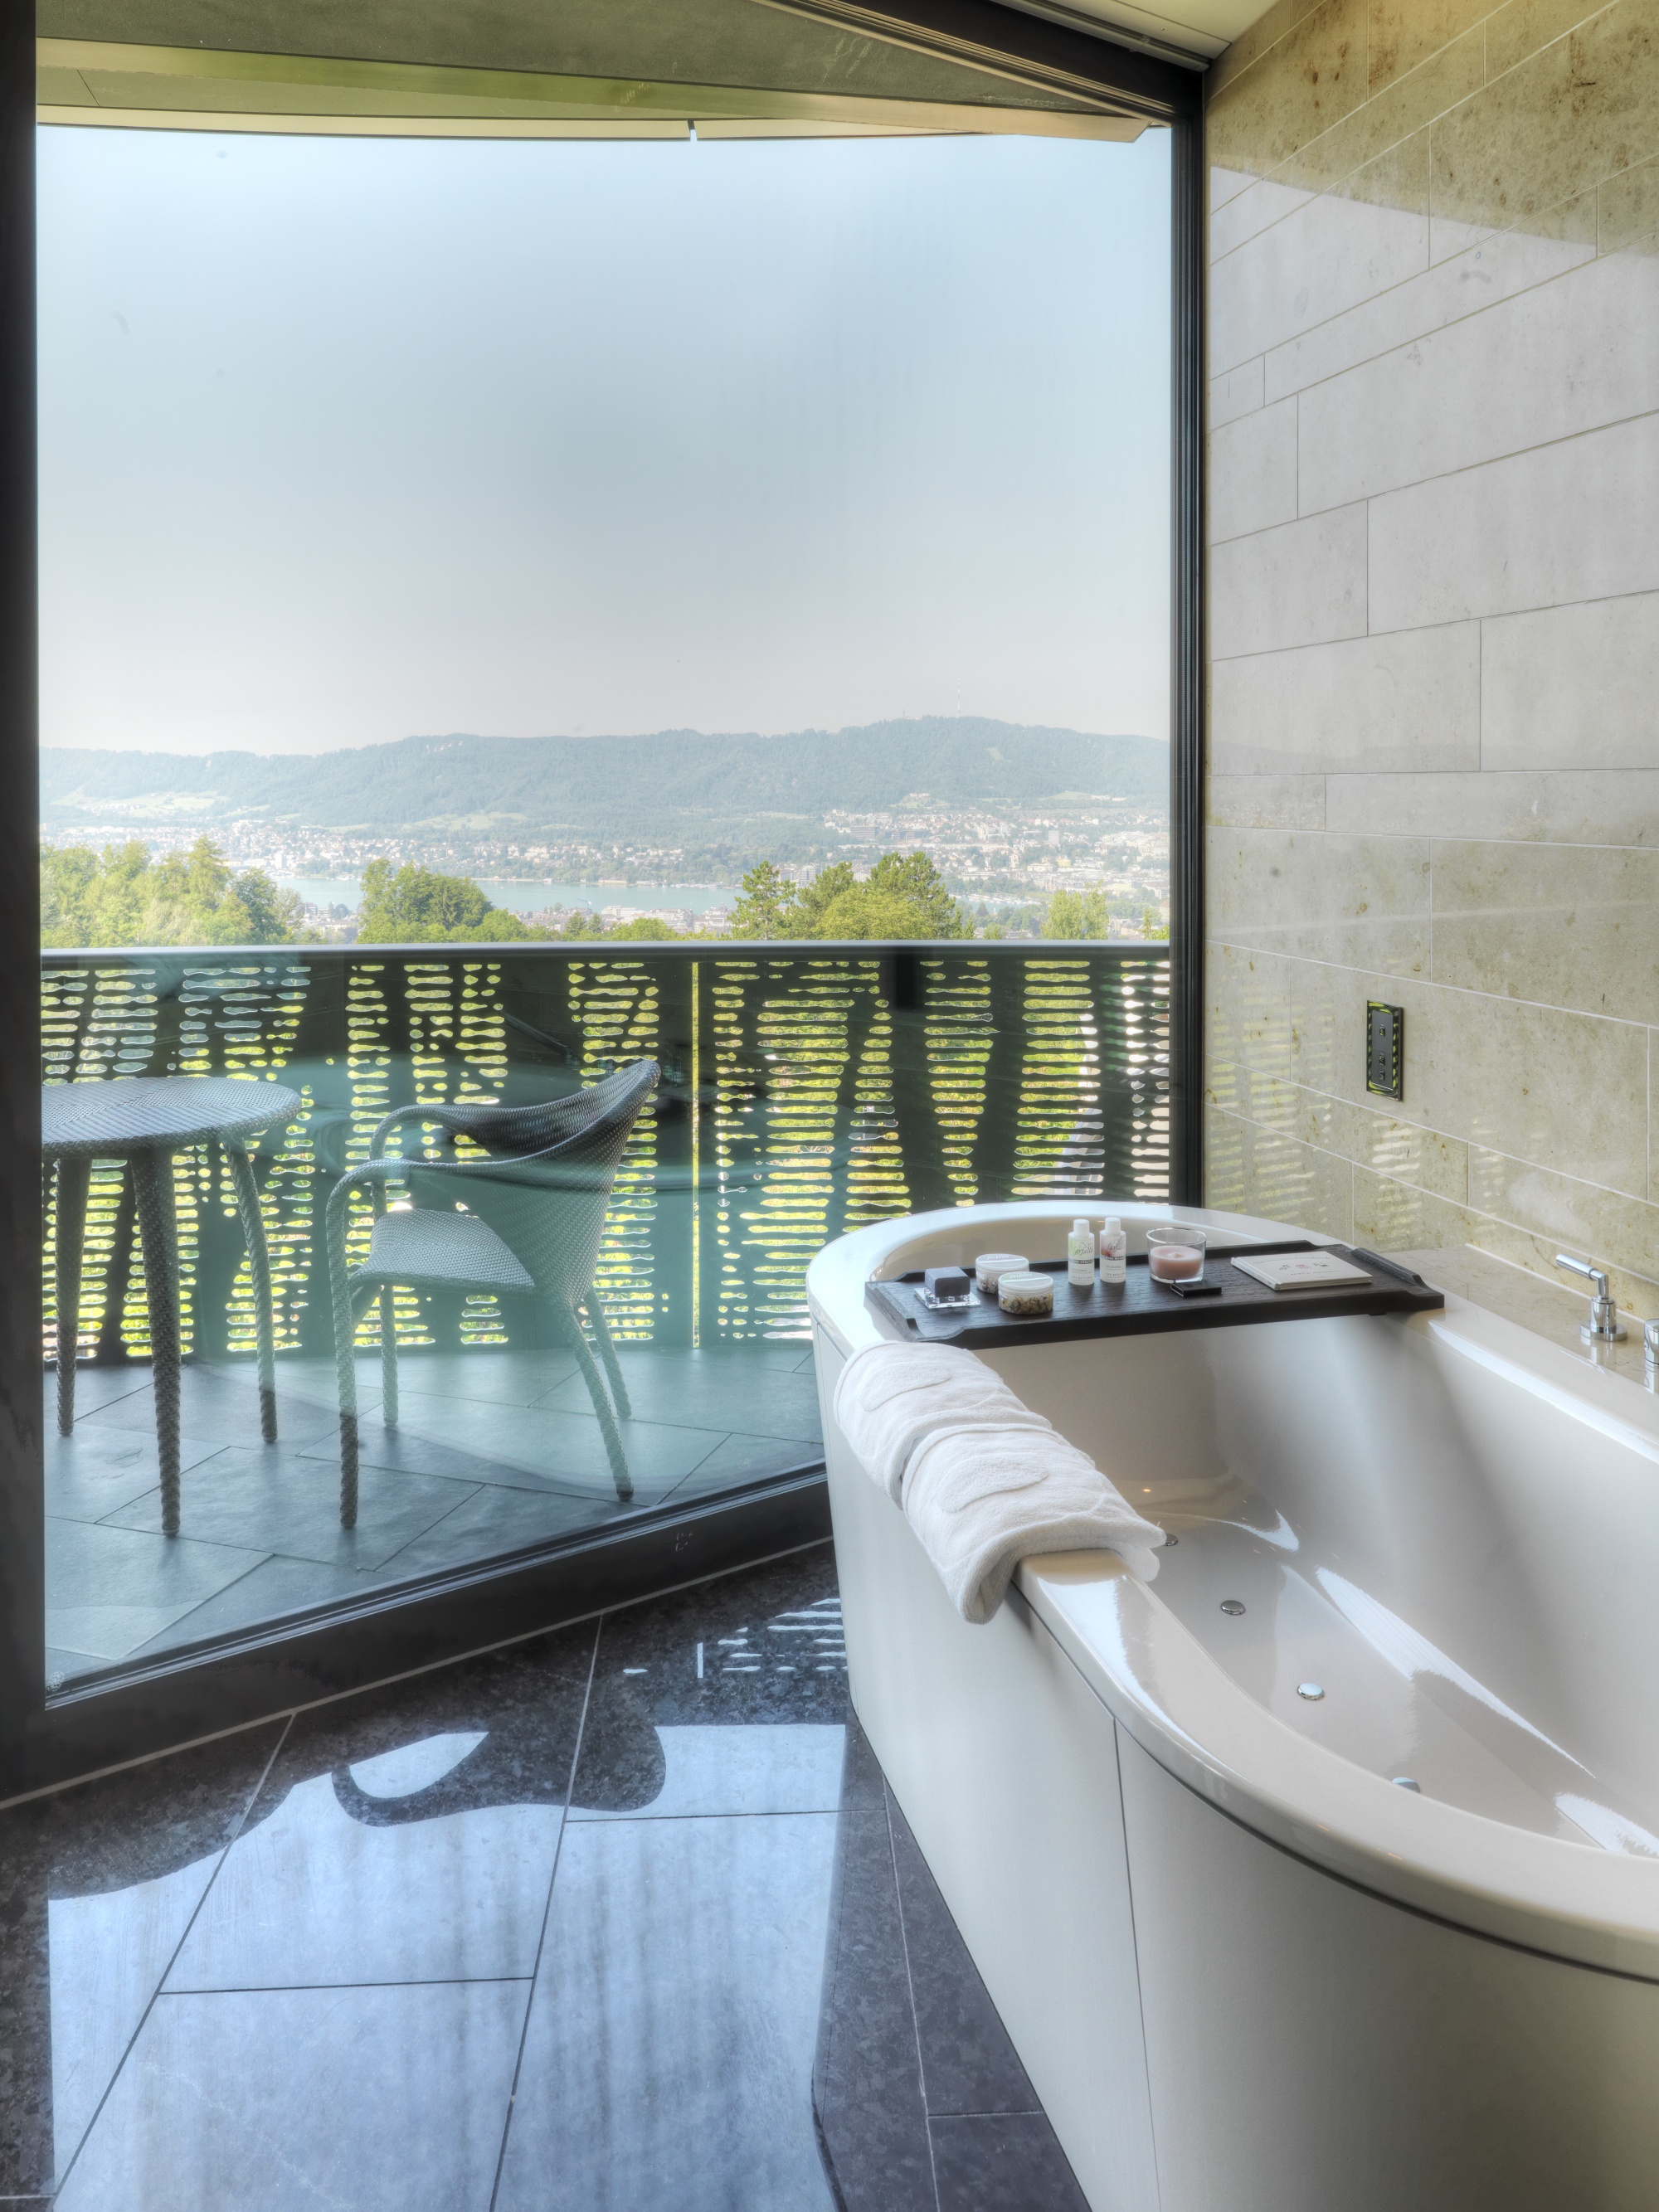 The Dolder Grand Hotel - Modern Hospitality Meets Swiss Luxury